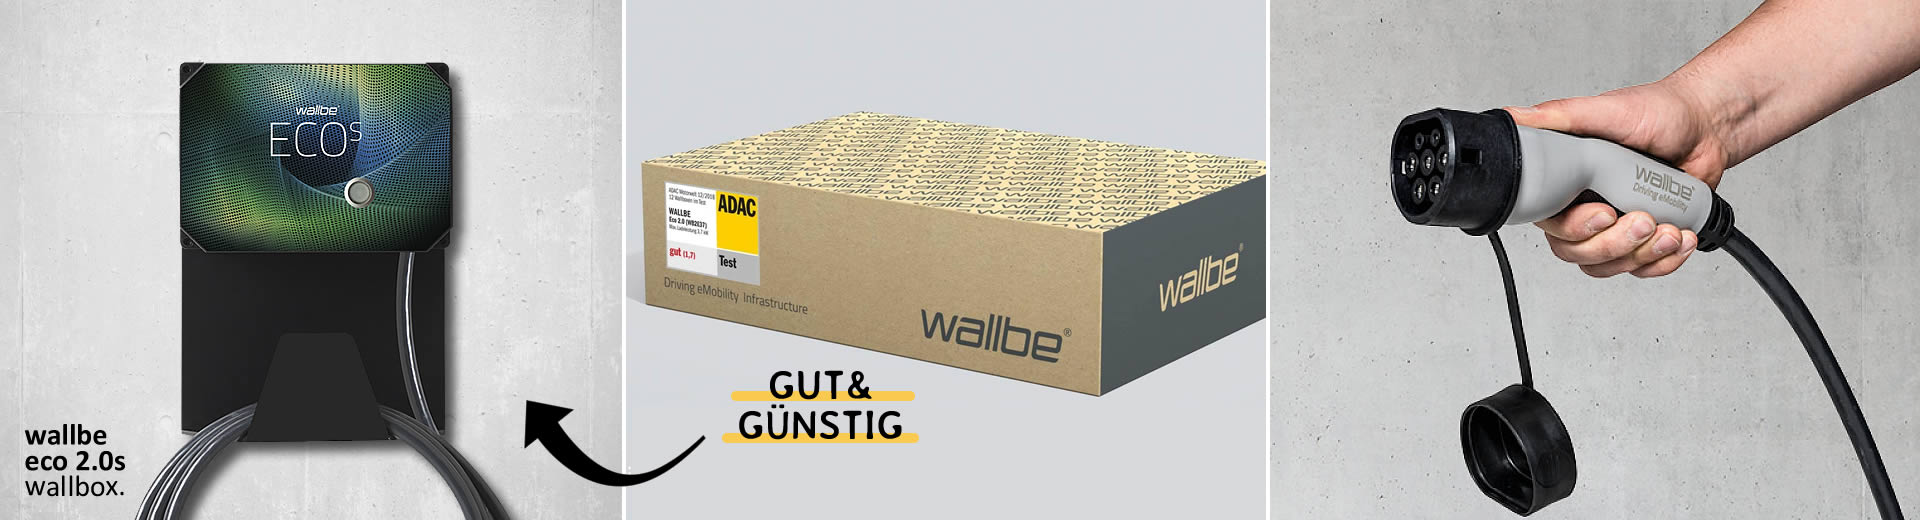 wallbe eco 2.0s wallbox